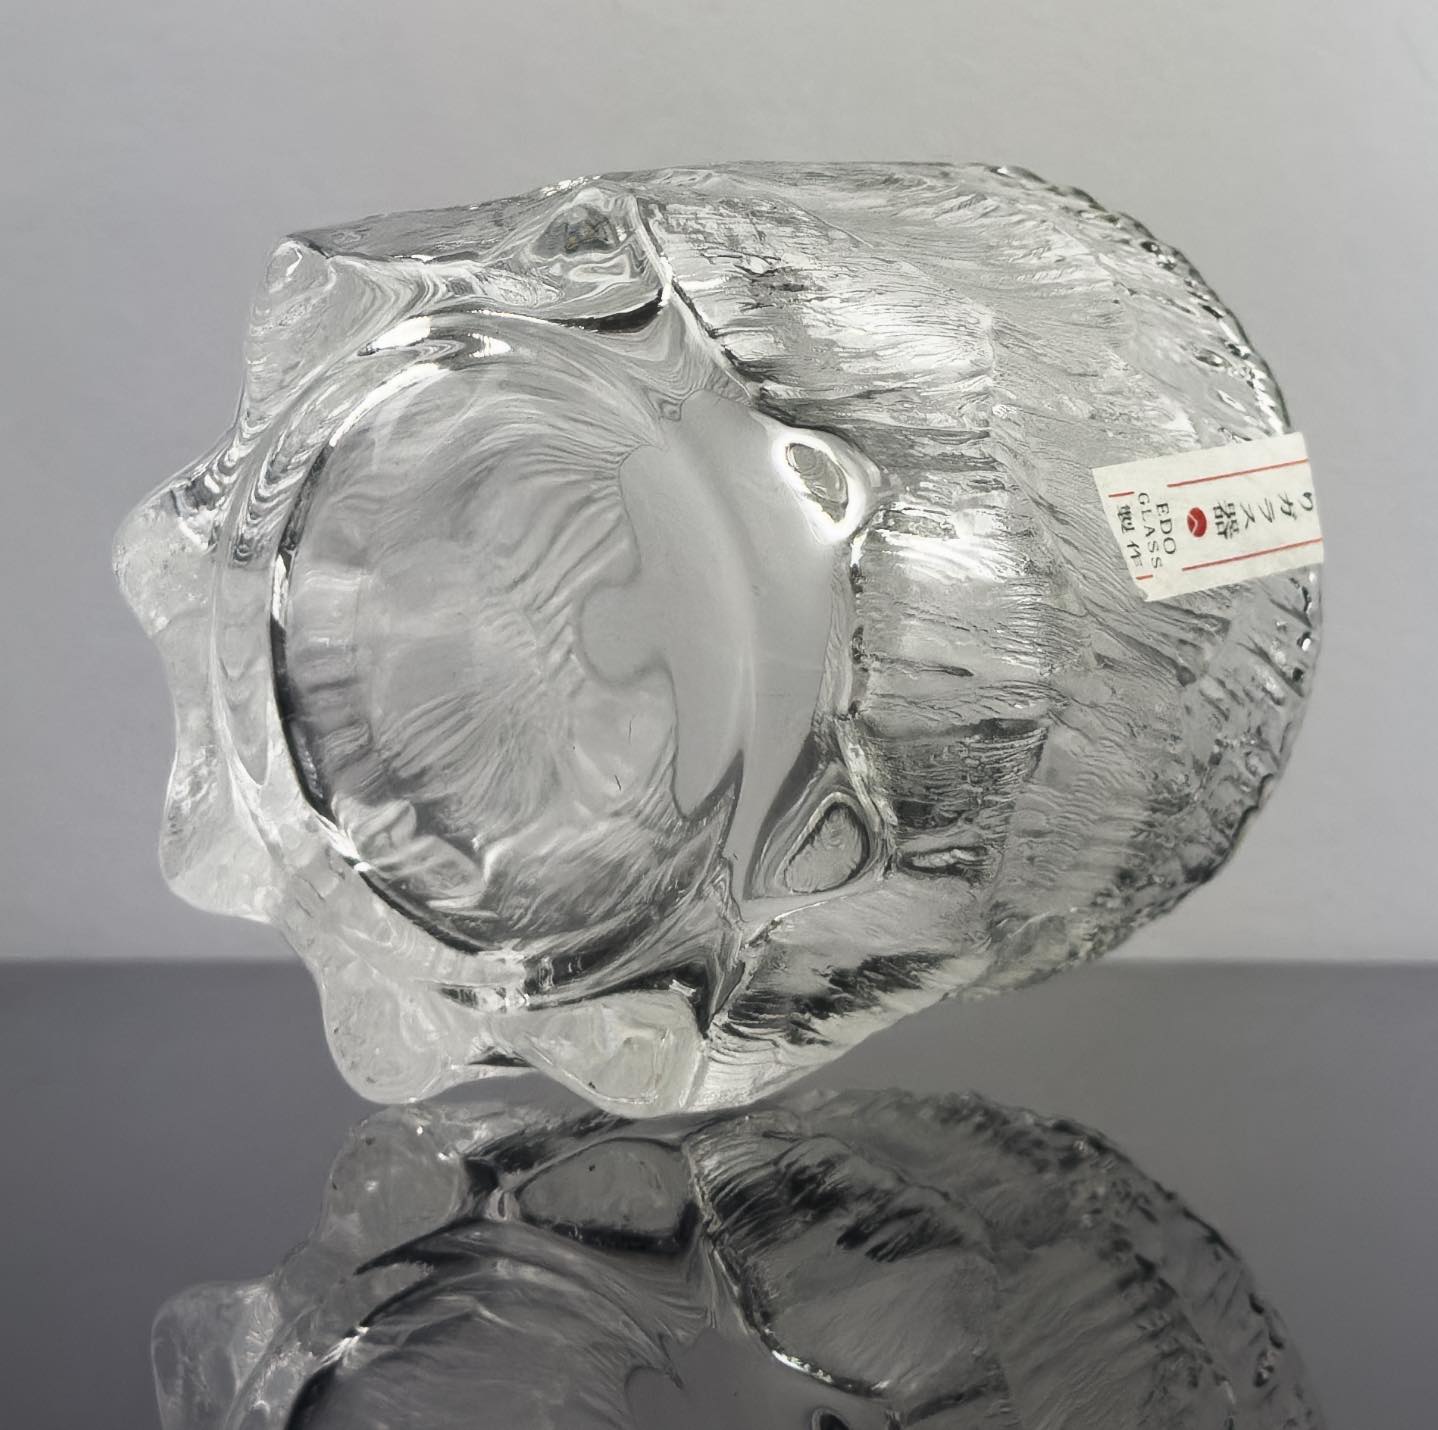 Dragon Claw Japanese Whisky Glass - Solkatt Designs 